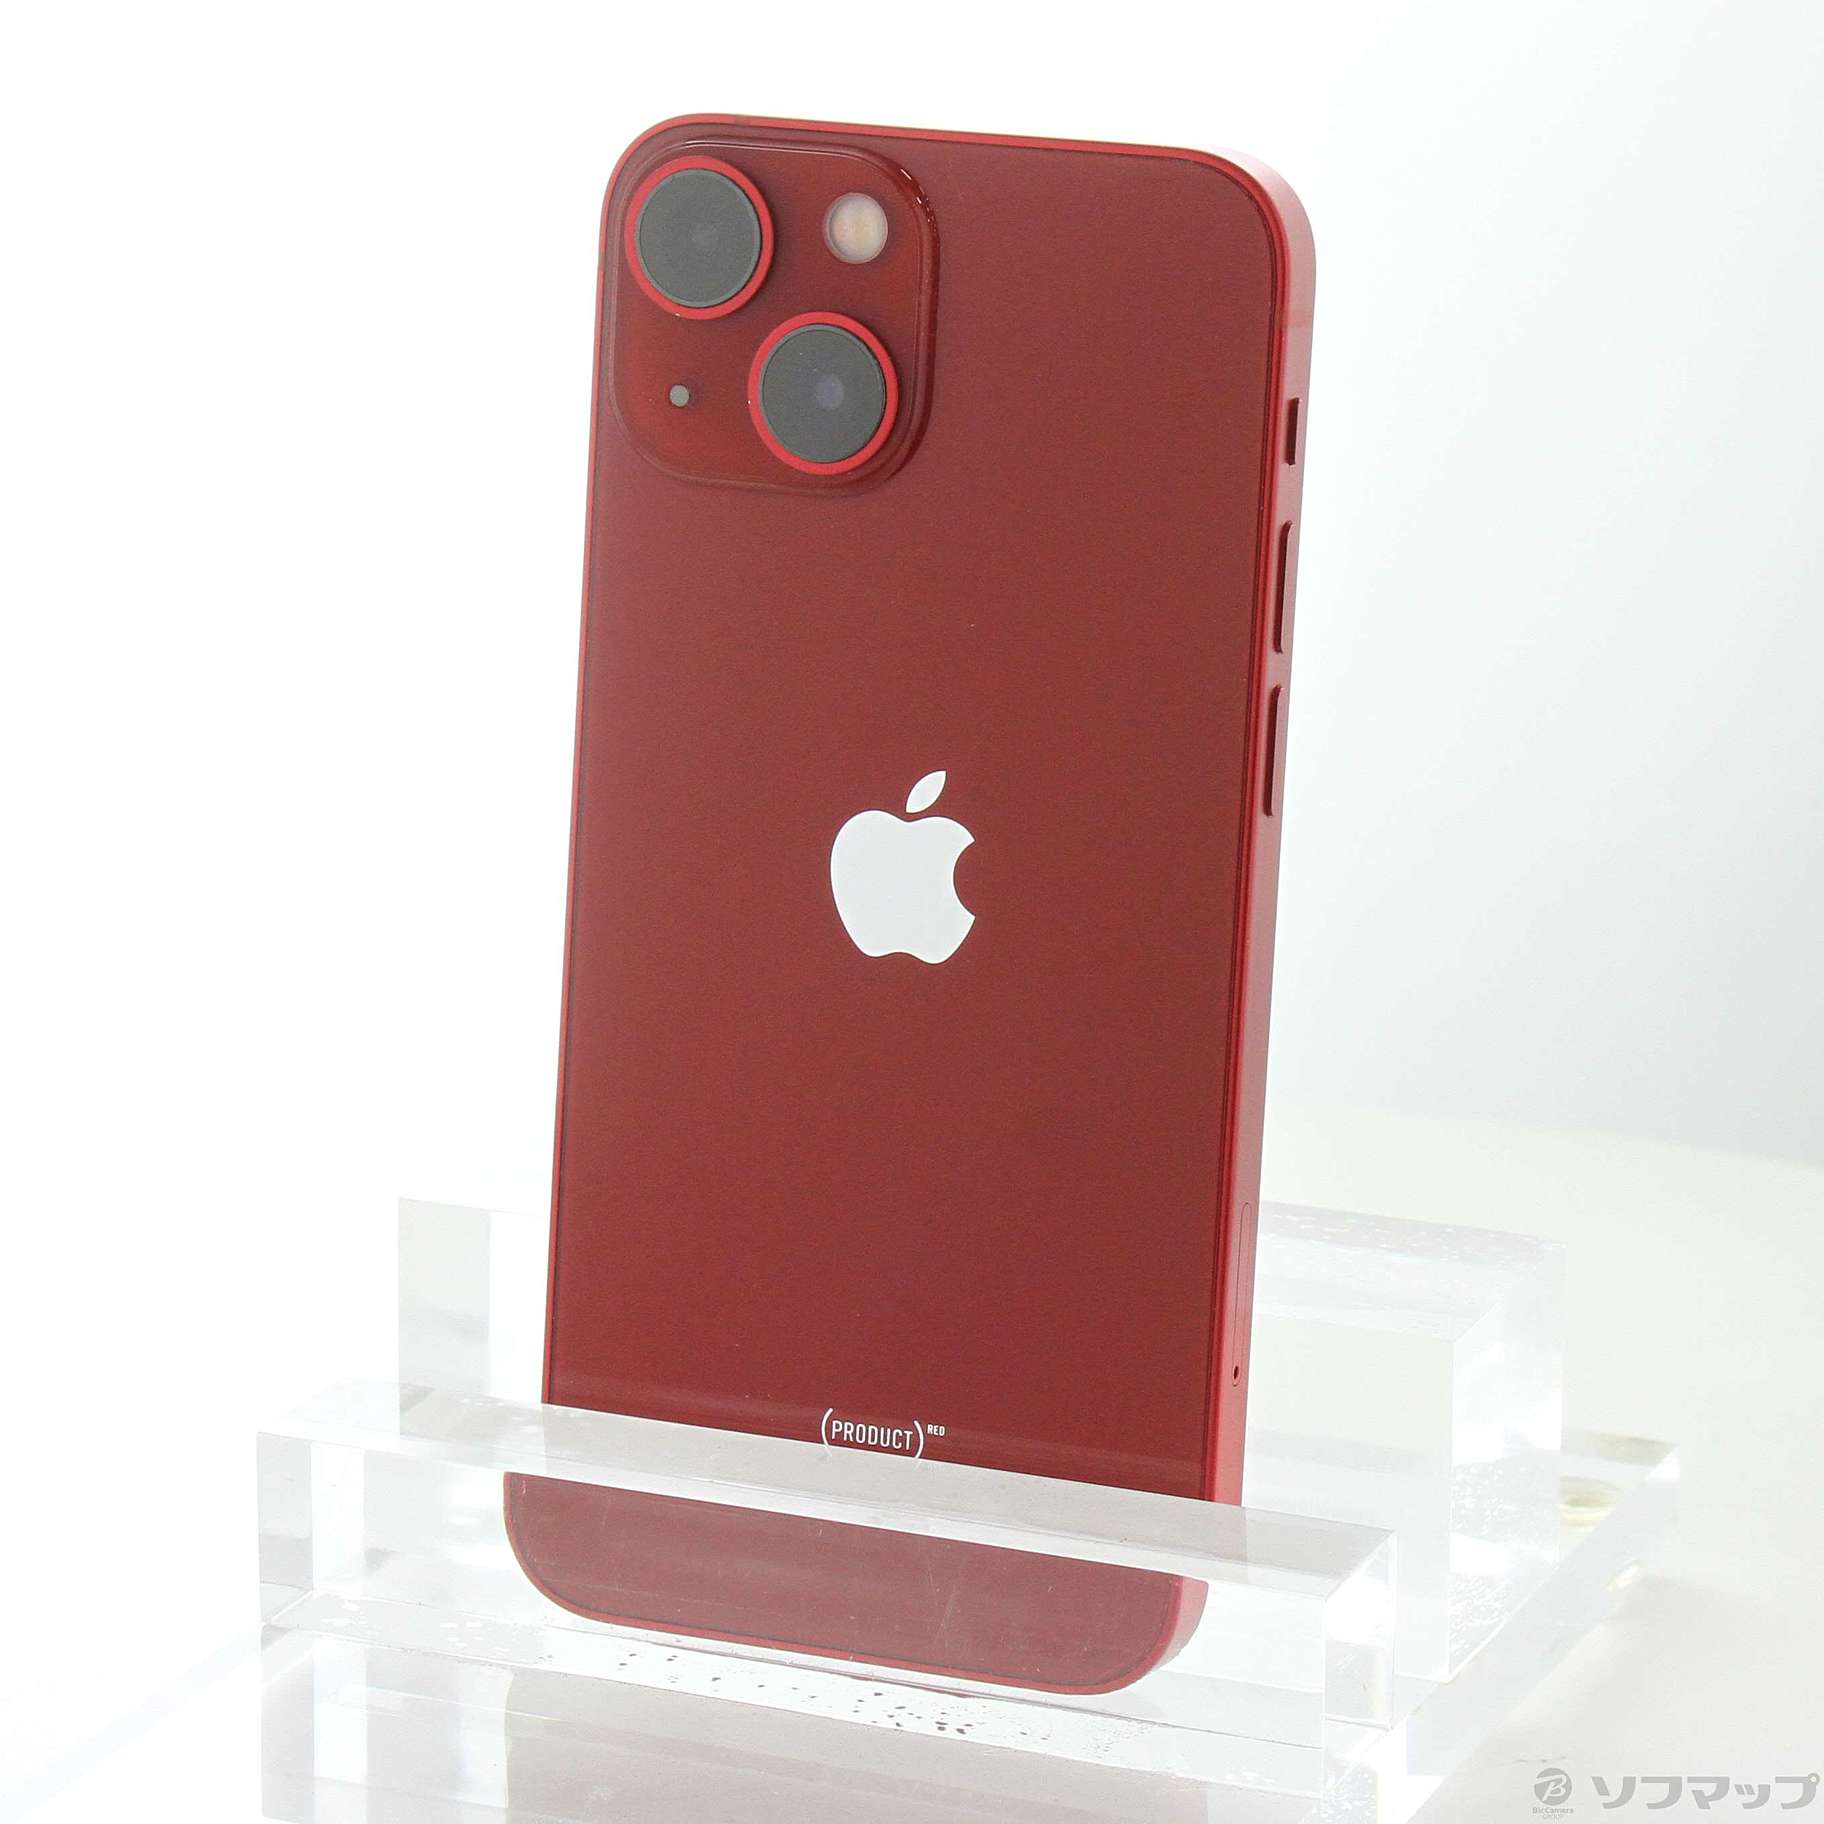 iPhone13(RED) 128GB レッド 本体 新品 未使用